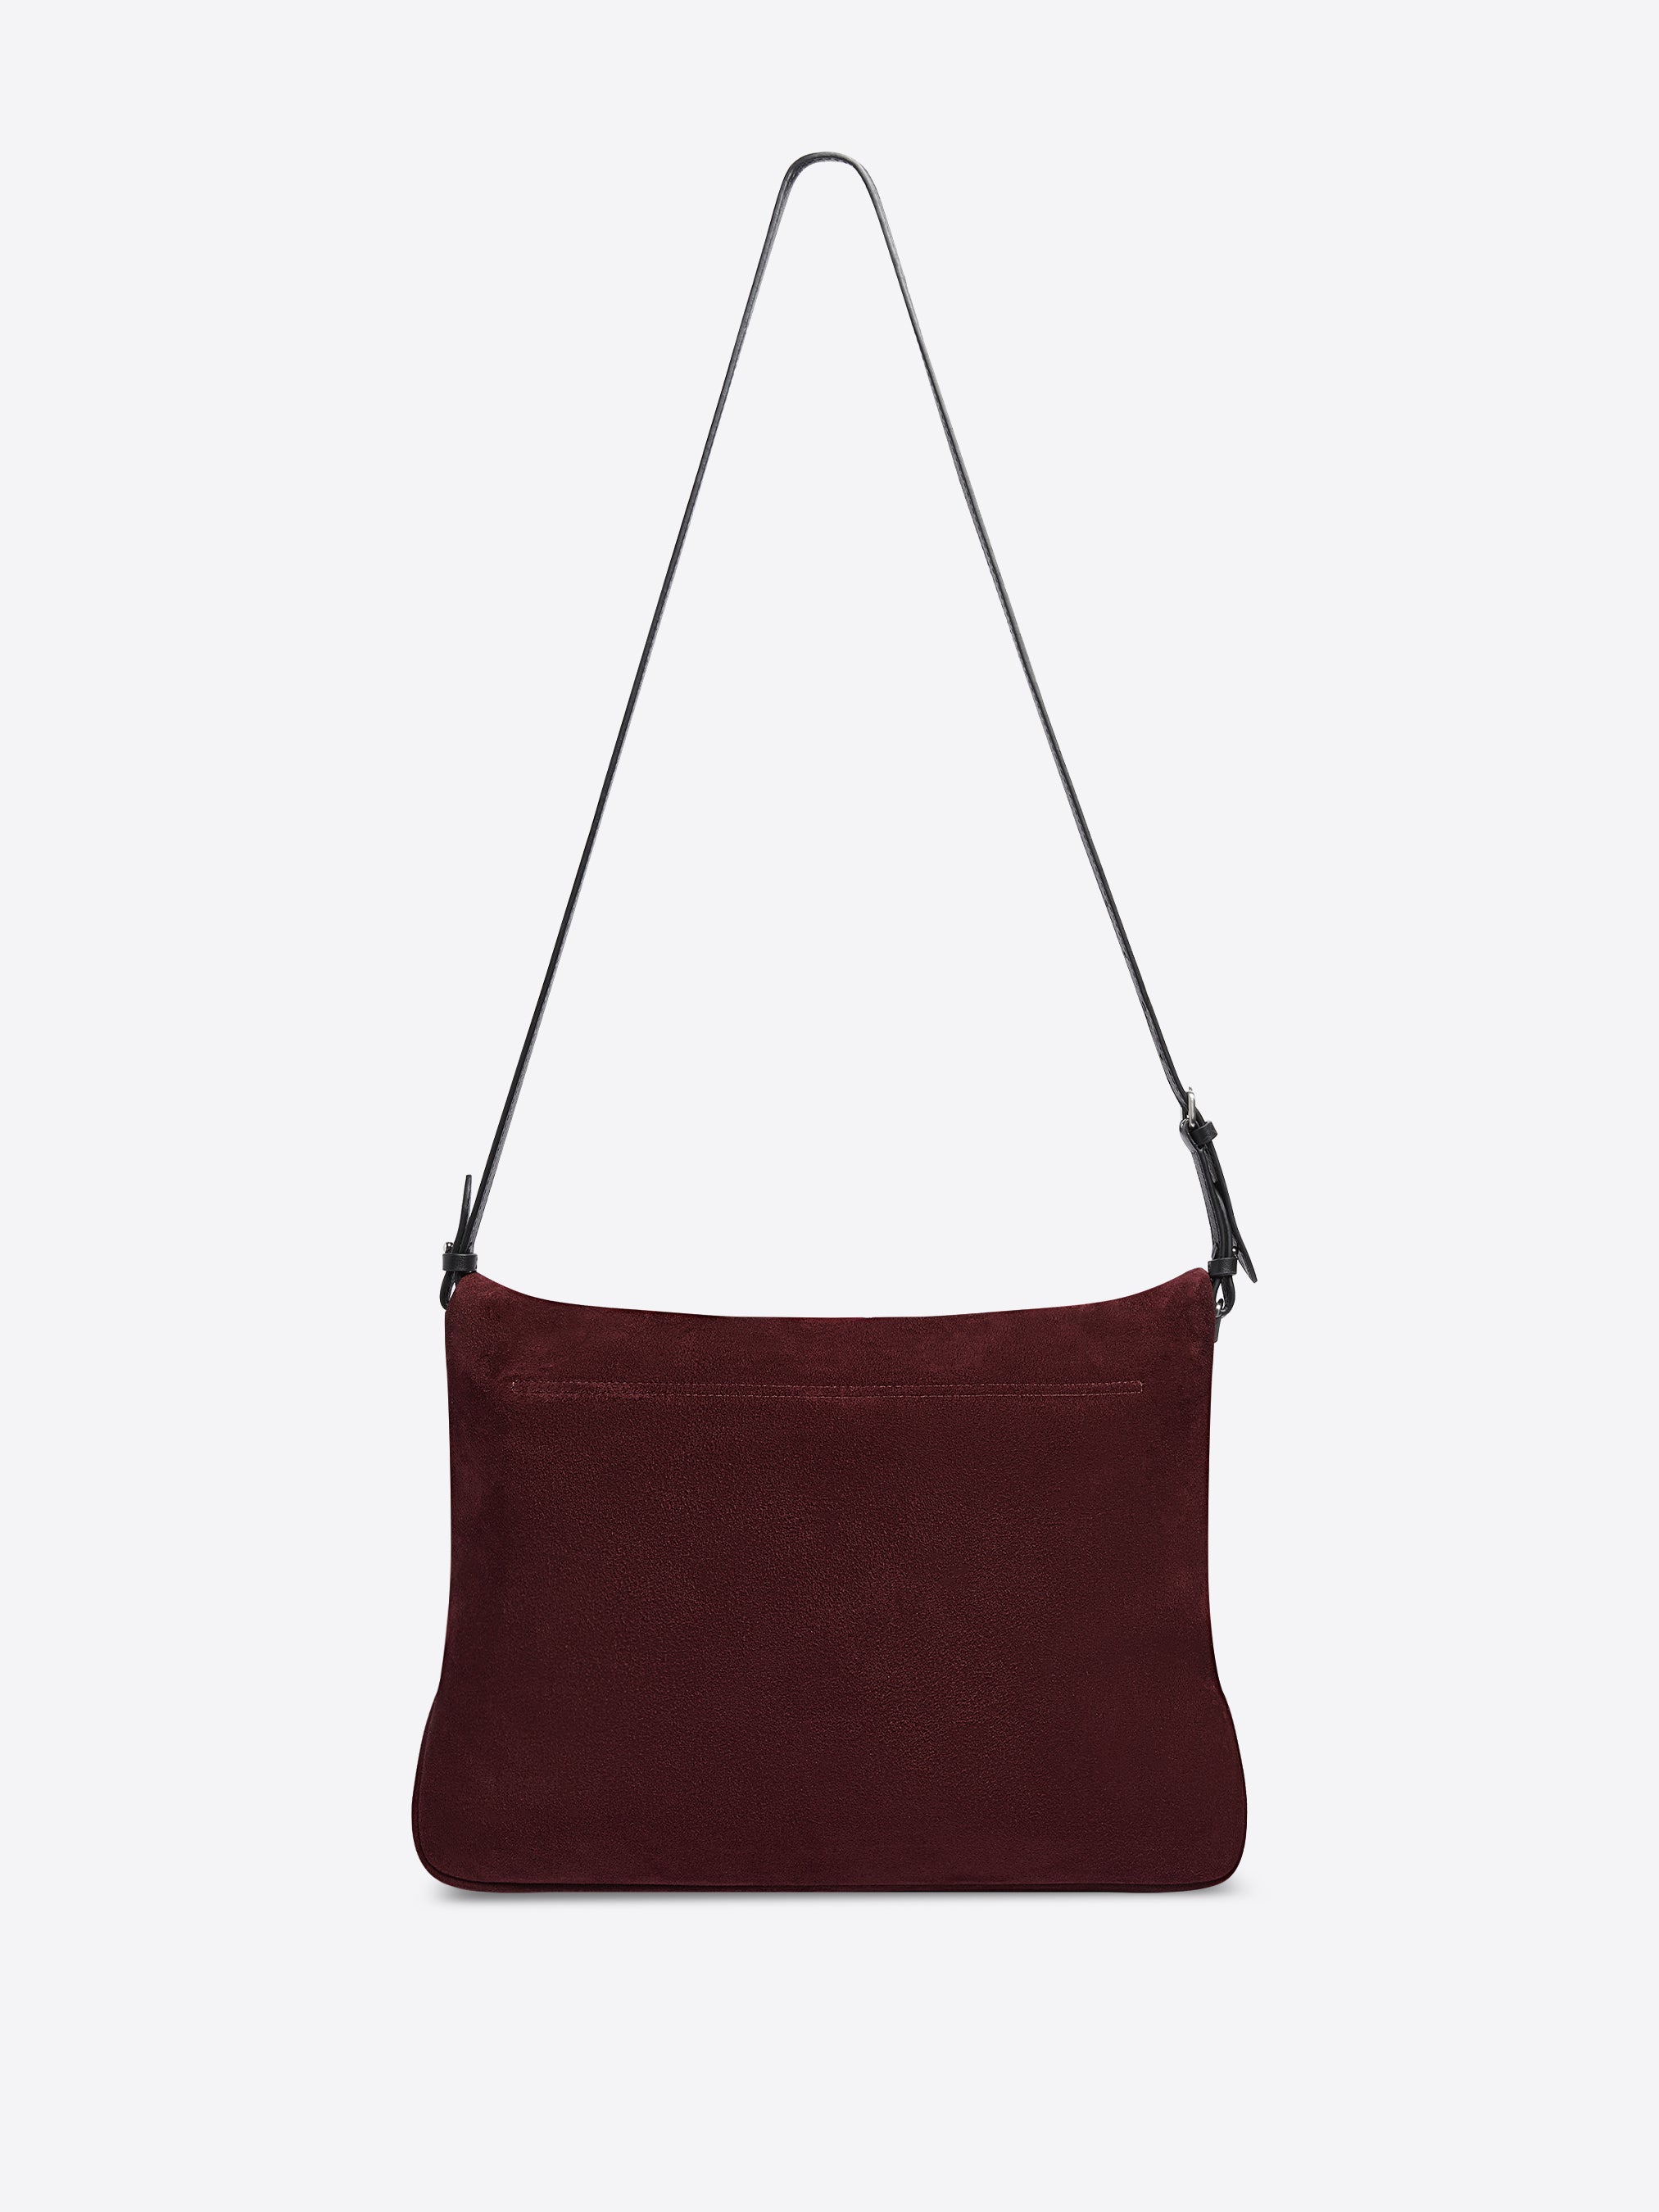 Amazon.com: Women suede Boho bag Bohemian style tote shoulder shopper bag  with zipper and pockets handmade (Cognac brown) : Handmade Products